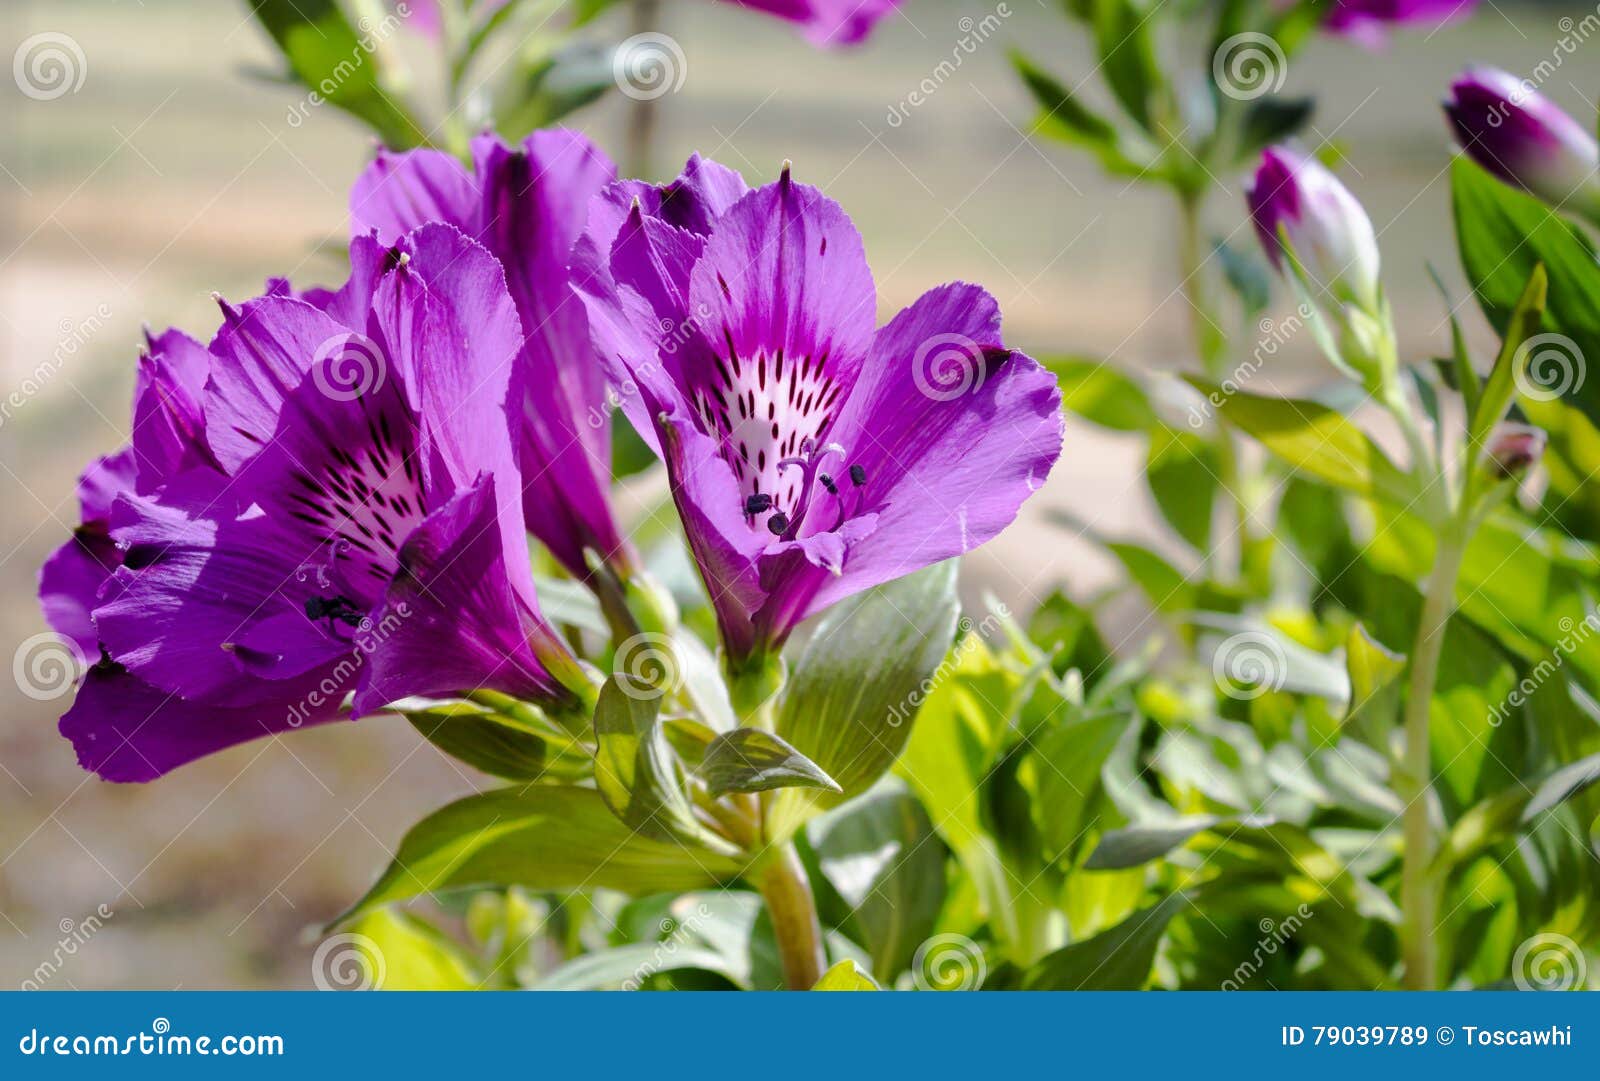 alstroemeria inticancha flowers close up